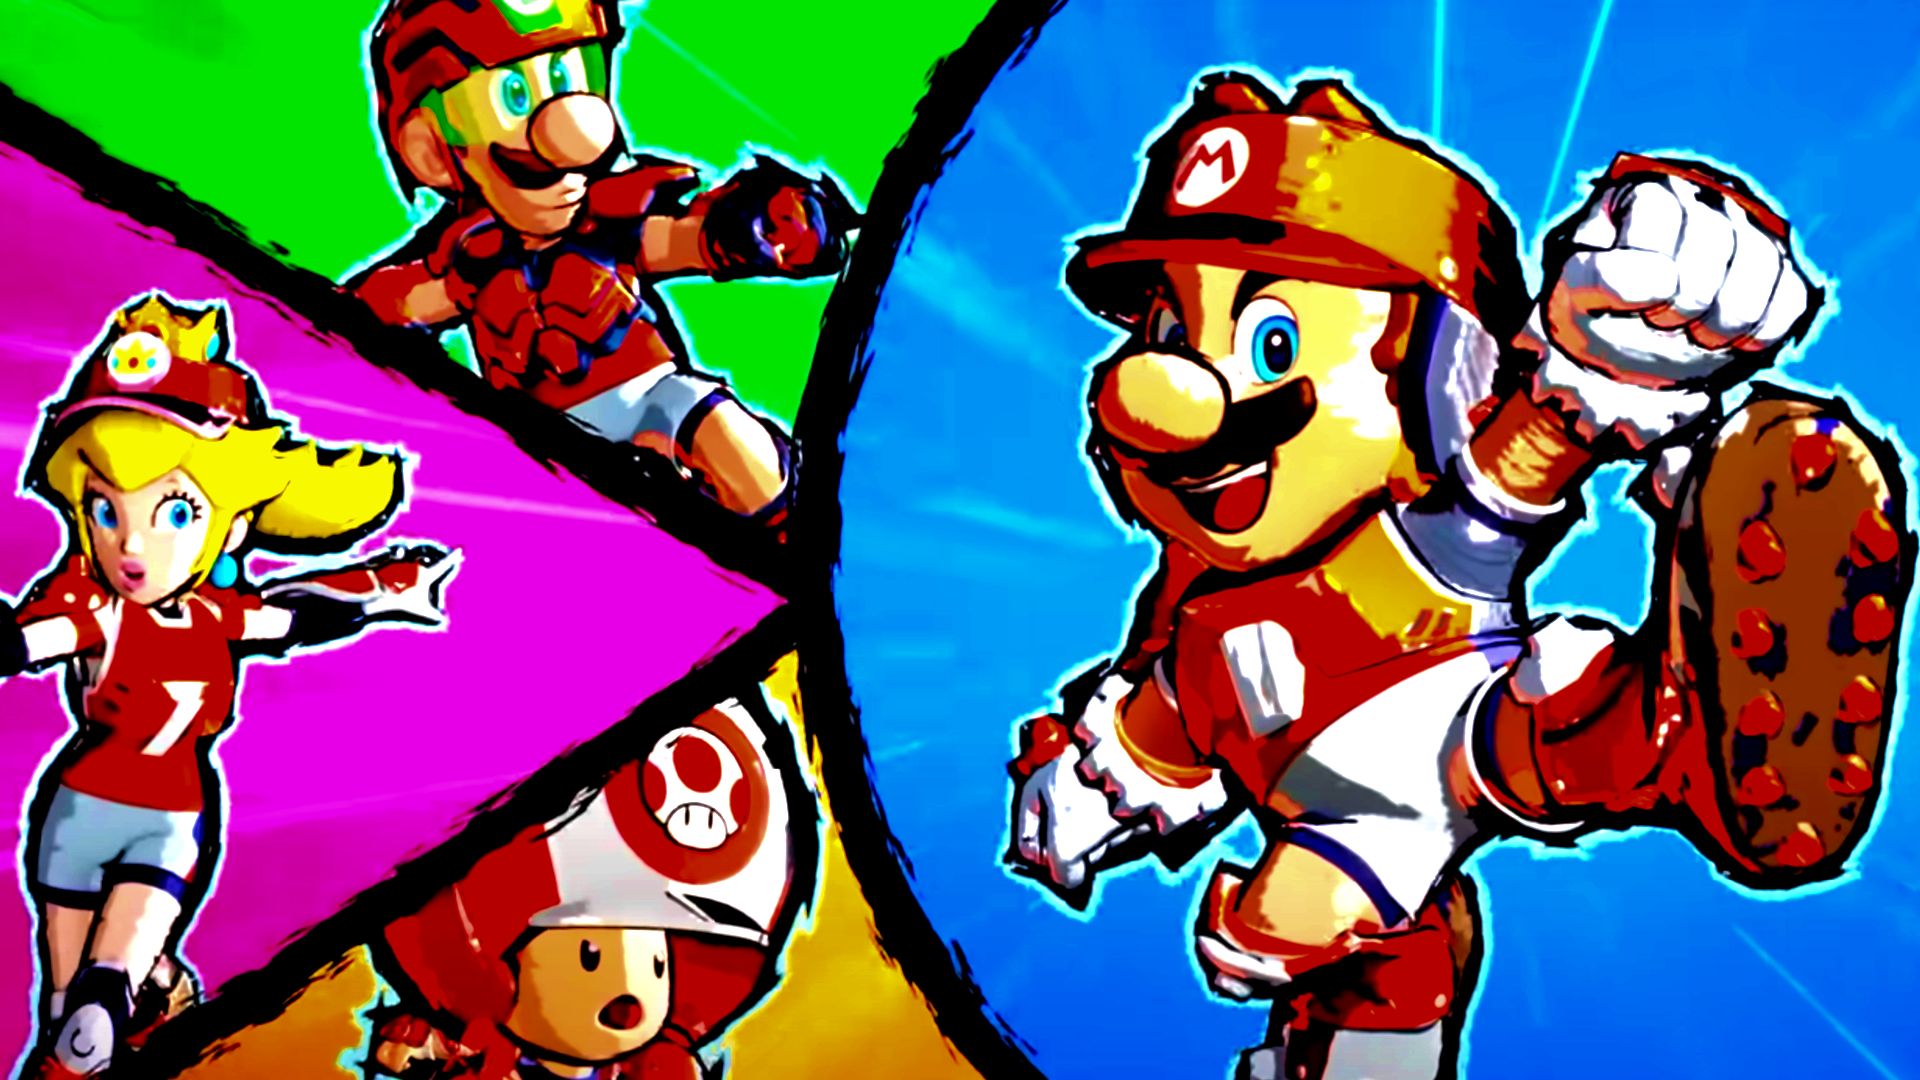 Nintendo confirms Mario Strikers Battle League DLC characters coming